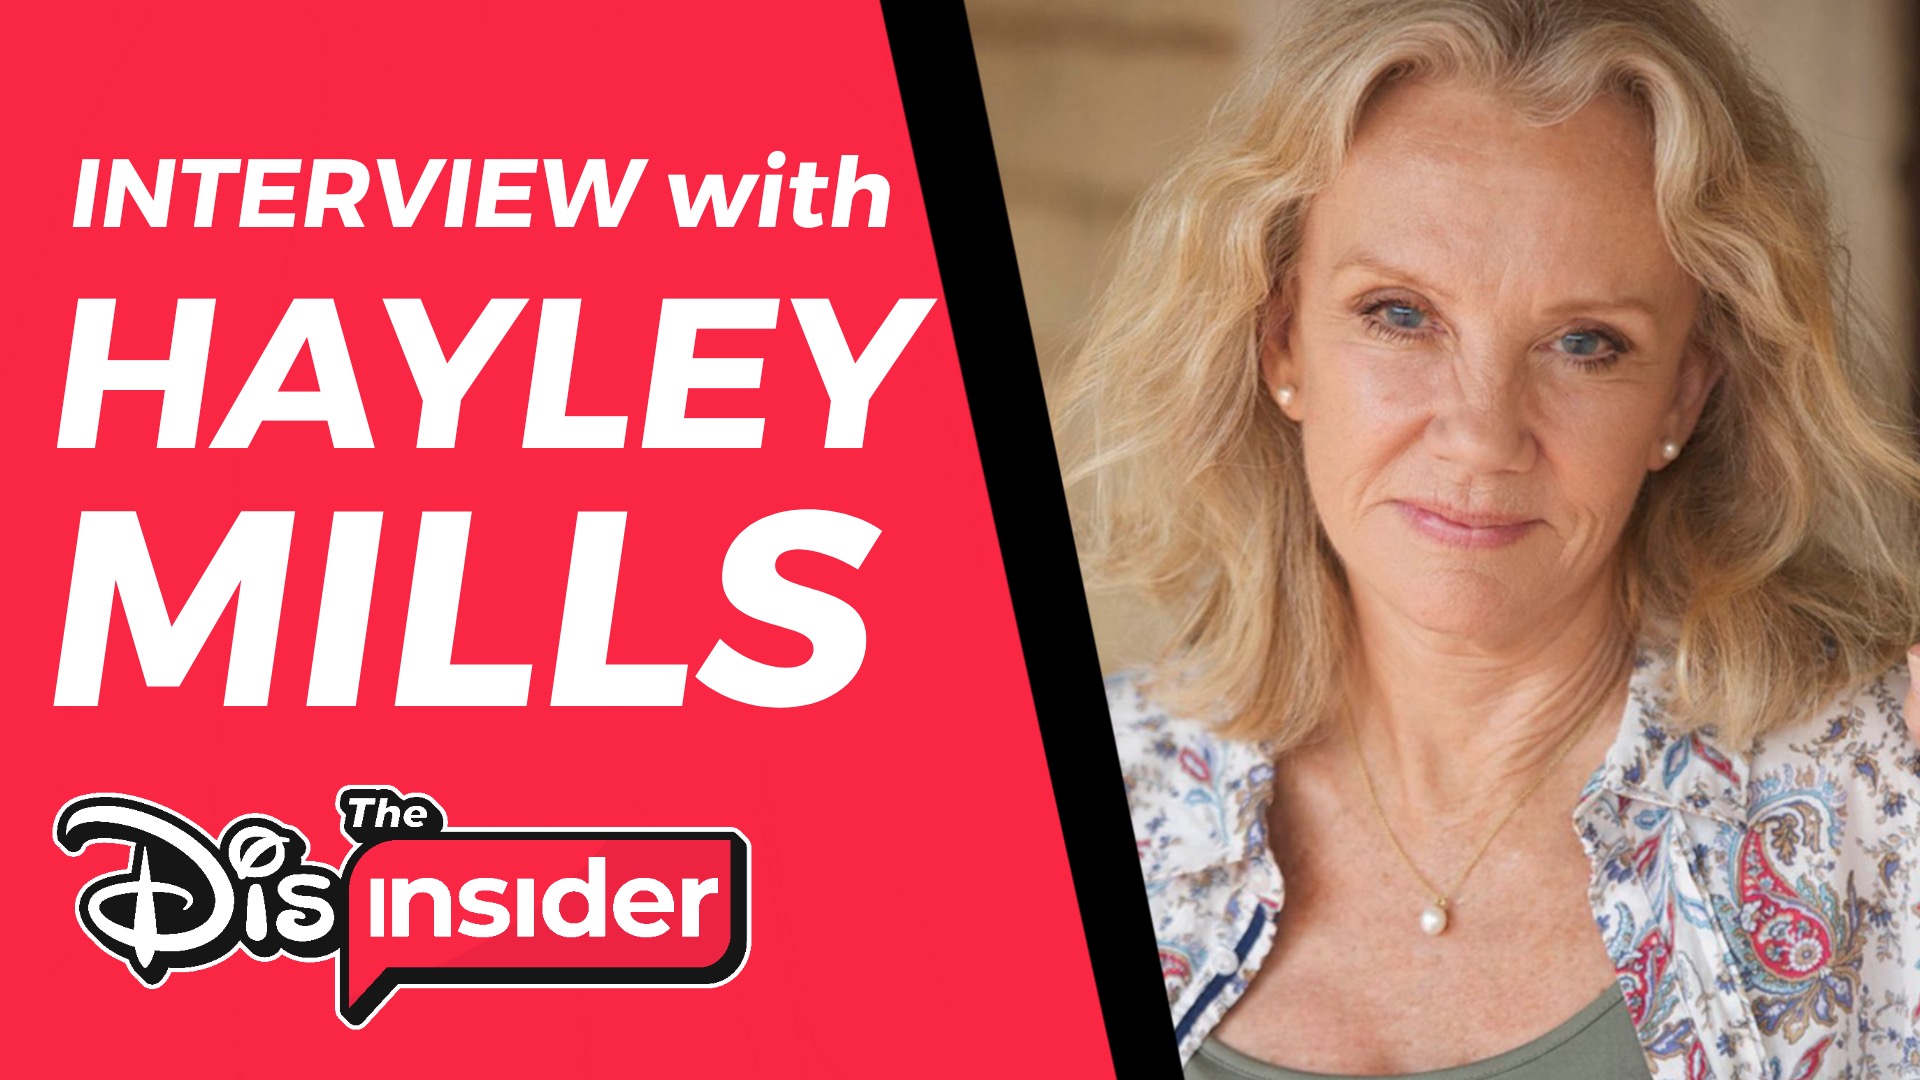 Exclusive: Disney Legend Hayley Mills Talks New Memoir, ‘The Parent Trap’, and More (Interview)